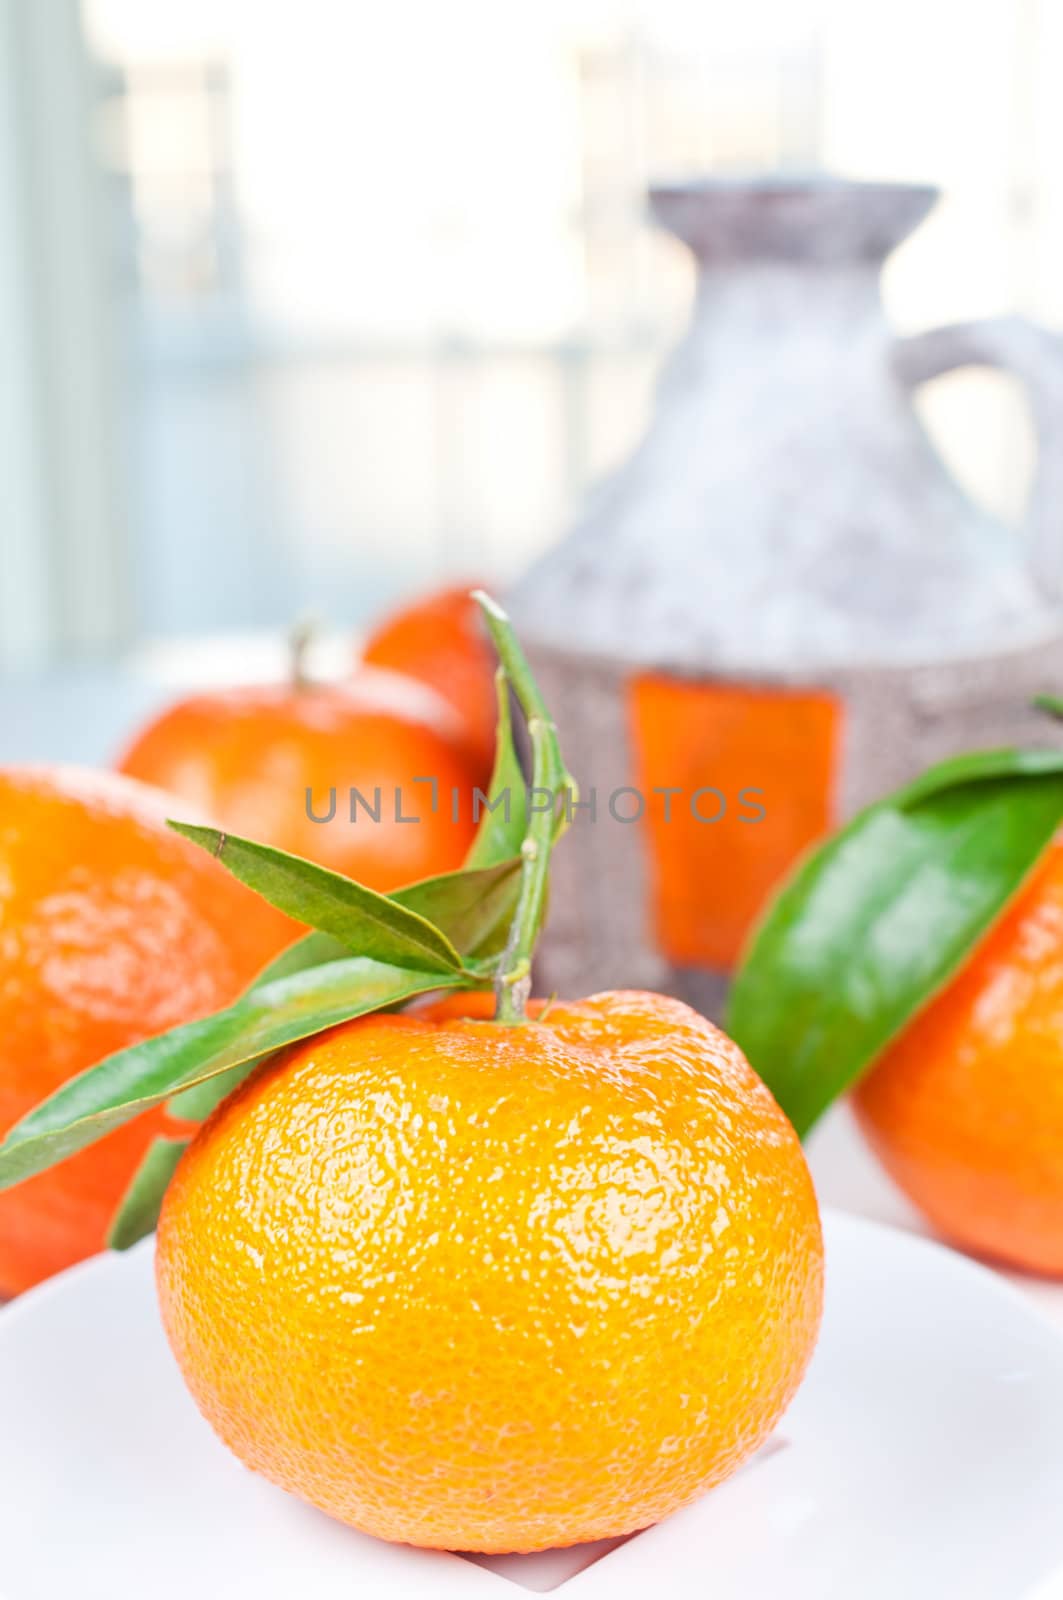 Tangerine on pitcher background by Nanisimova